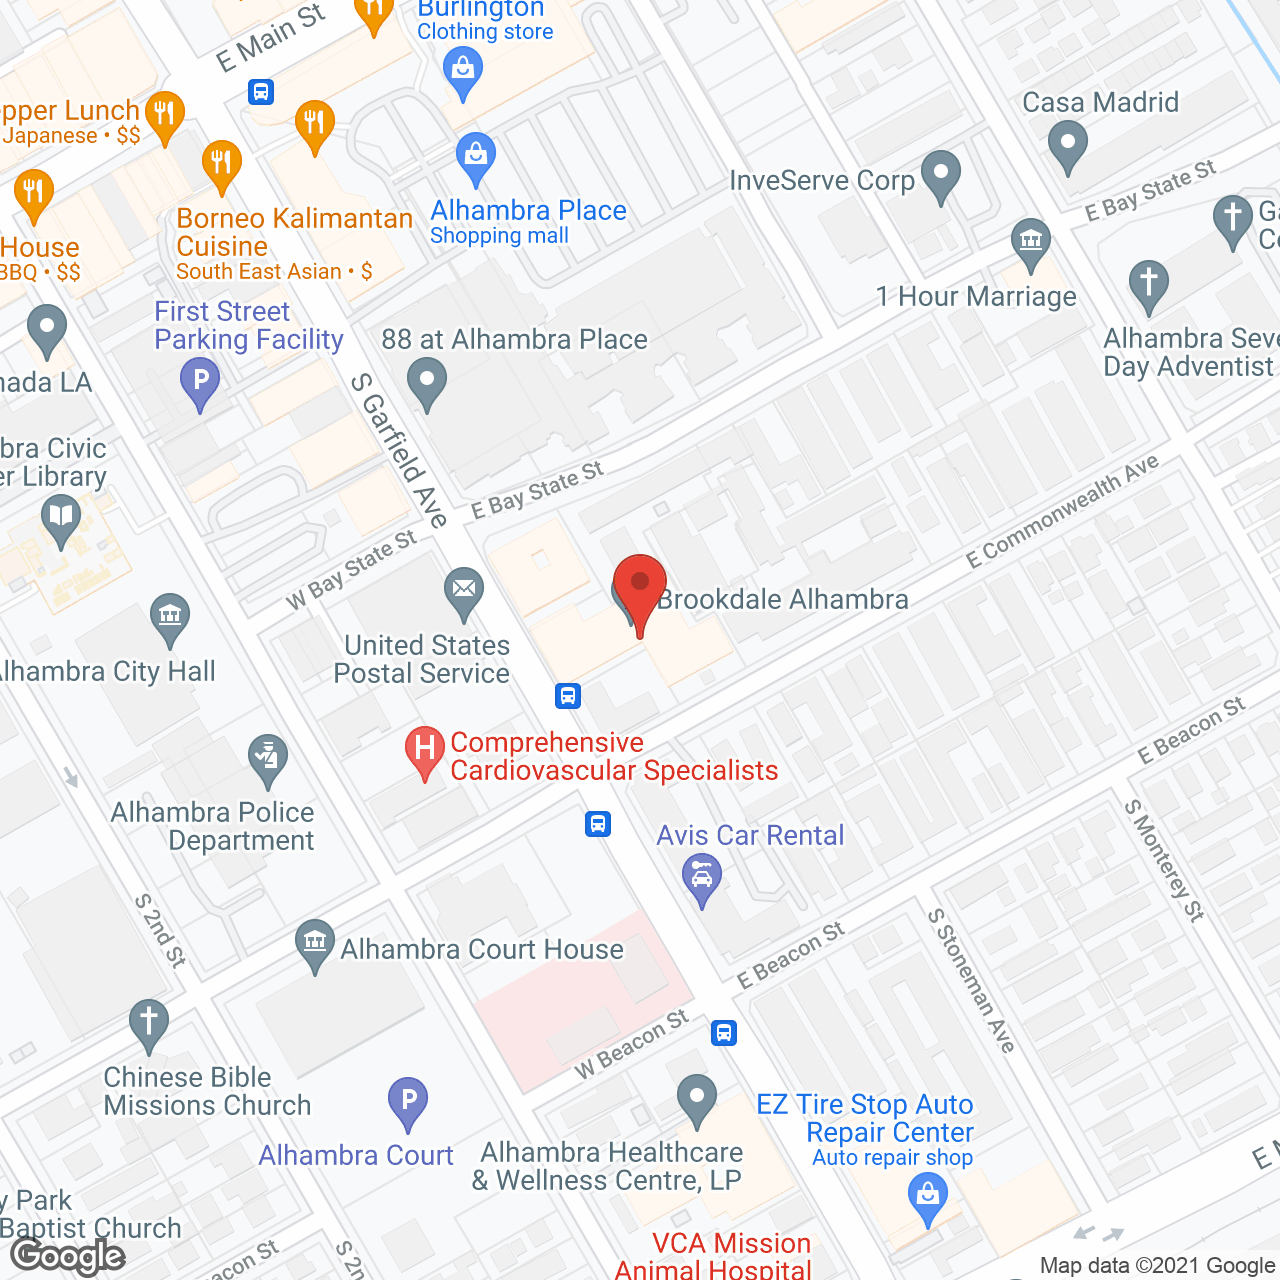 Brookdale Alhambra in google map